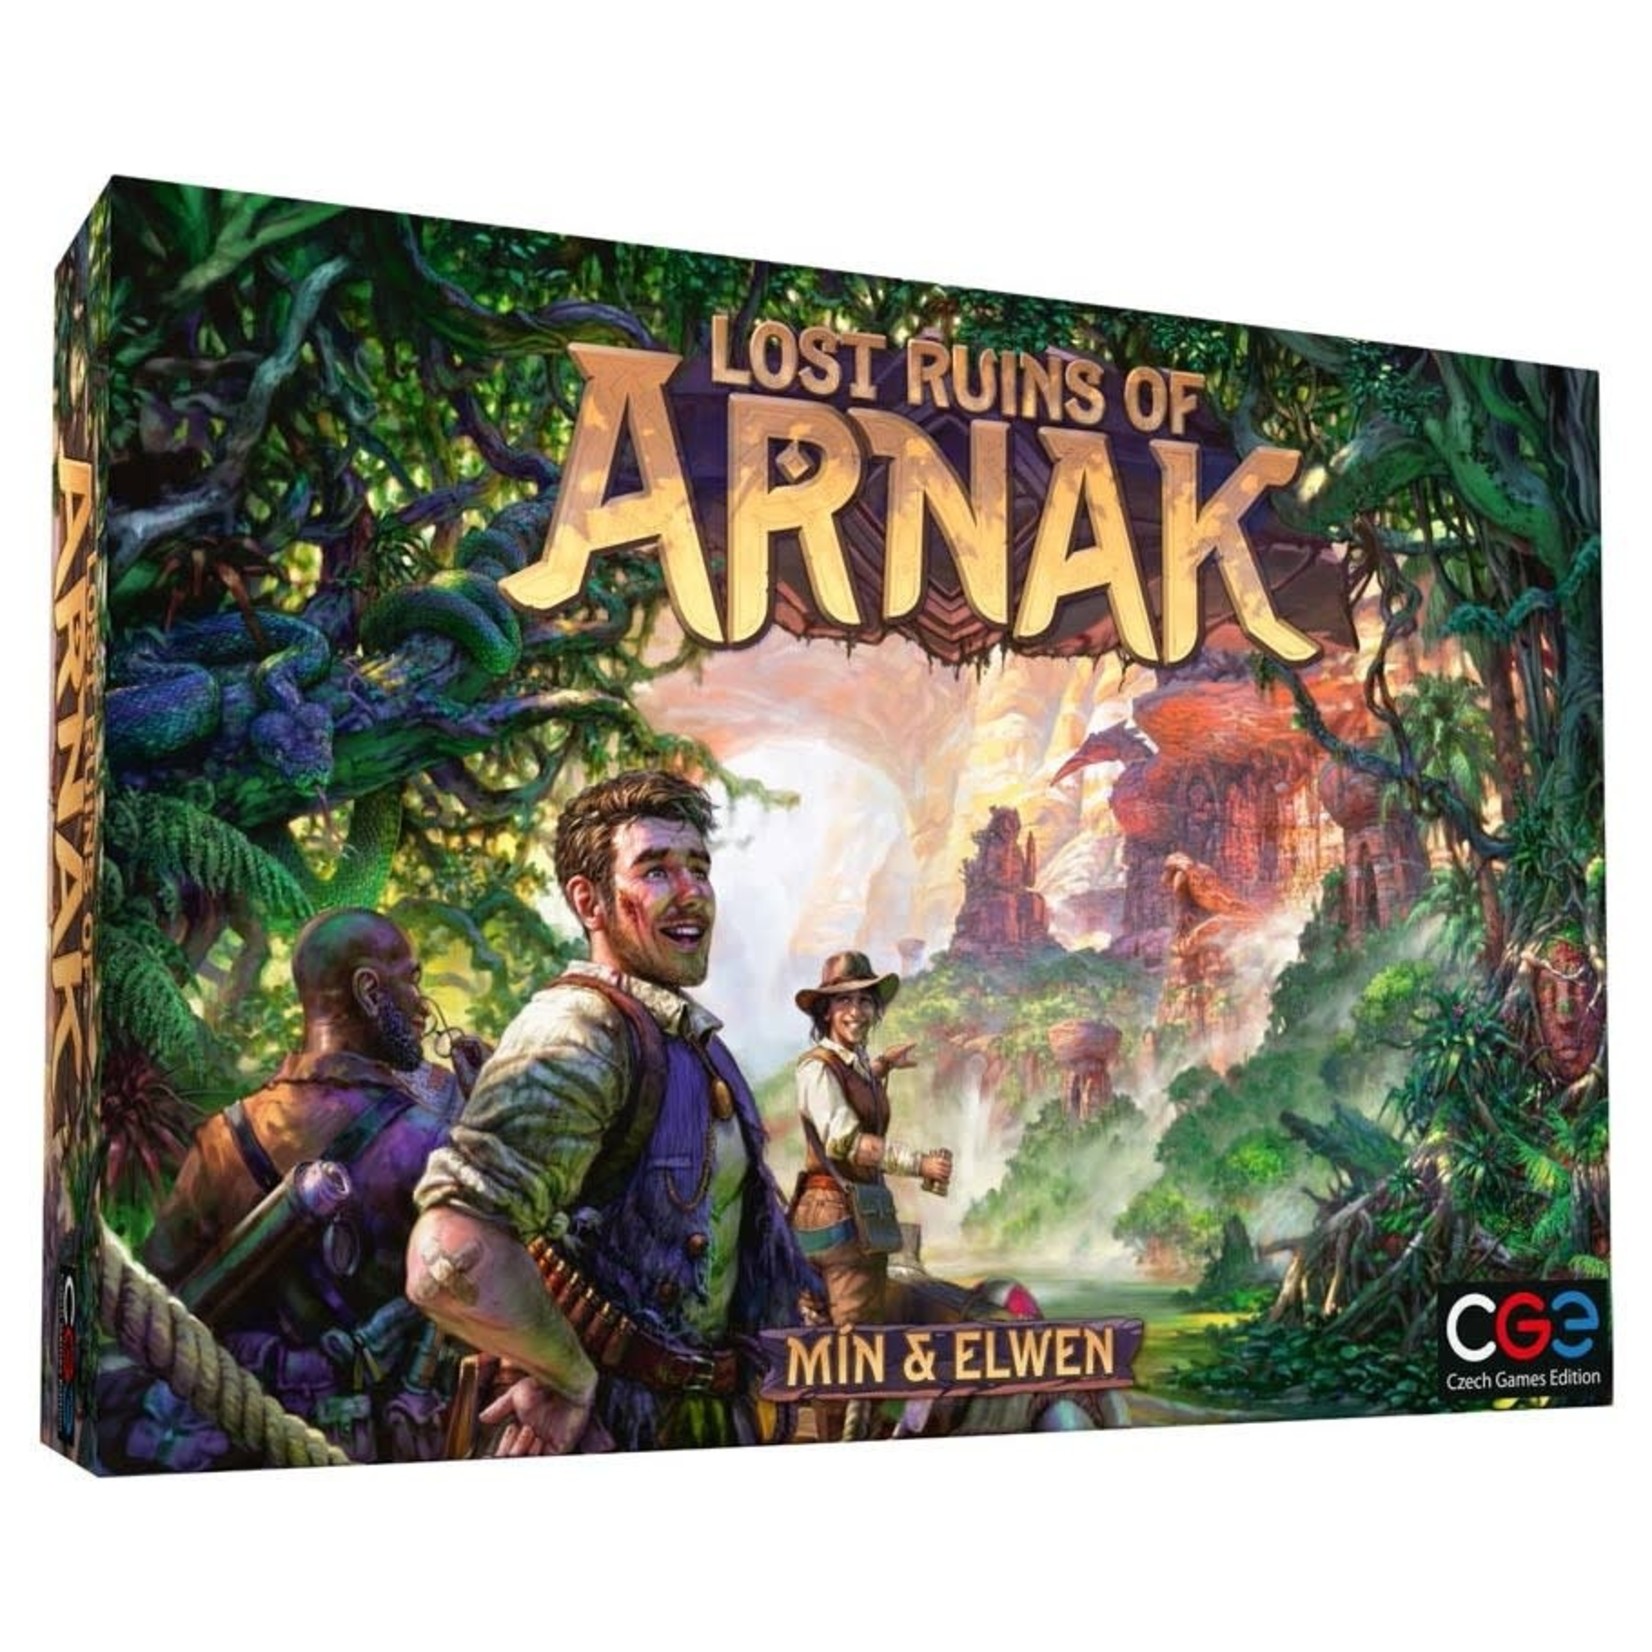 Czech Games Edition, Inc. Lost Ruins Of Arnak